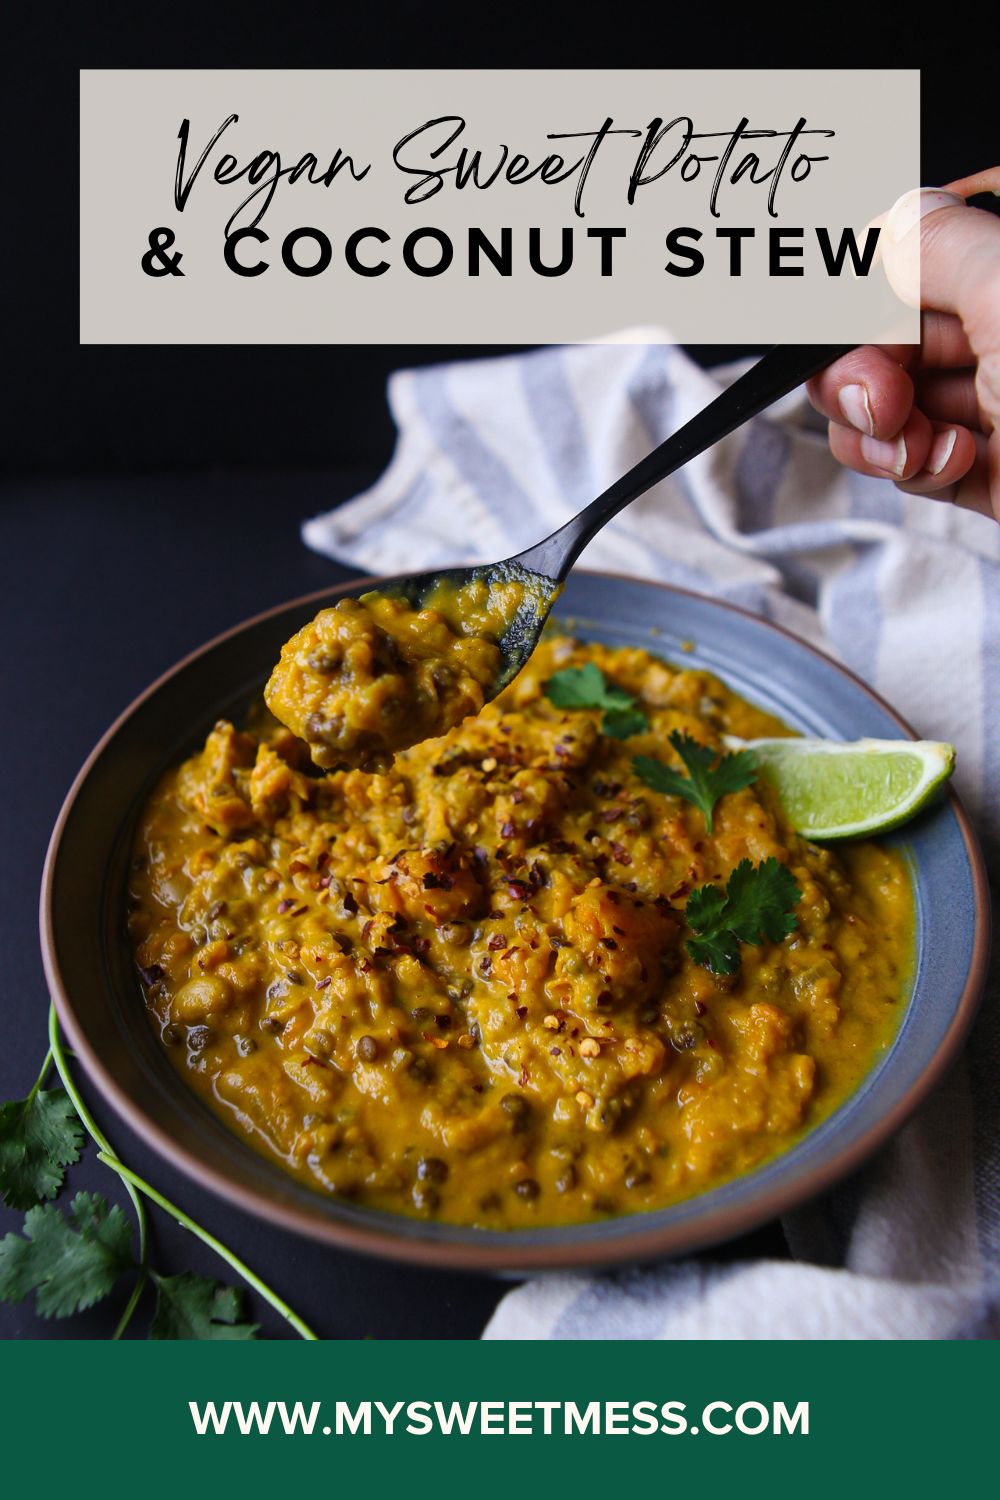 Sweet potato and coconut stew